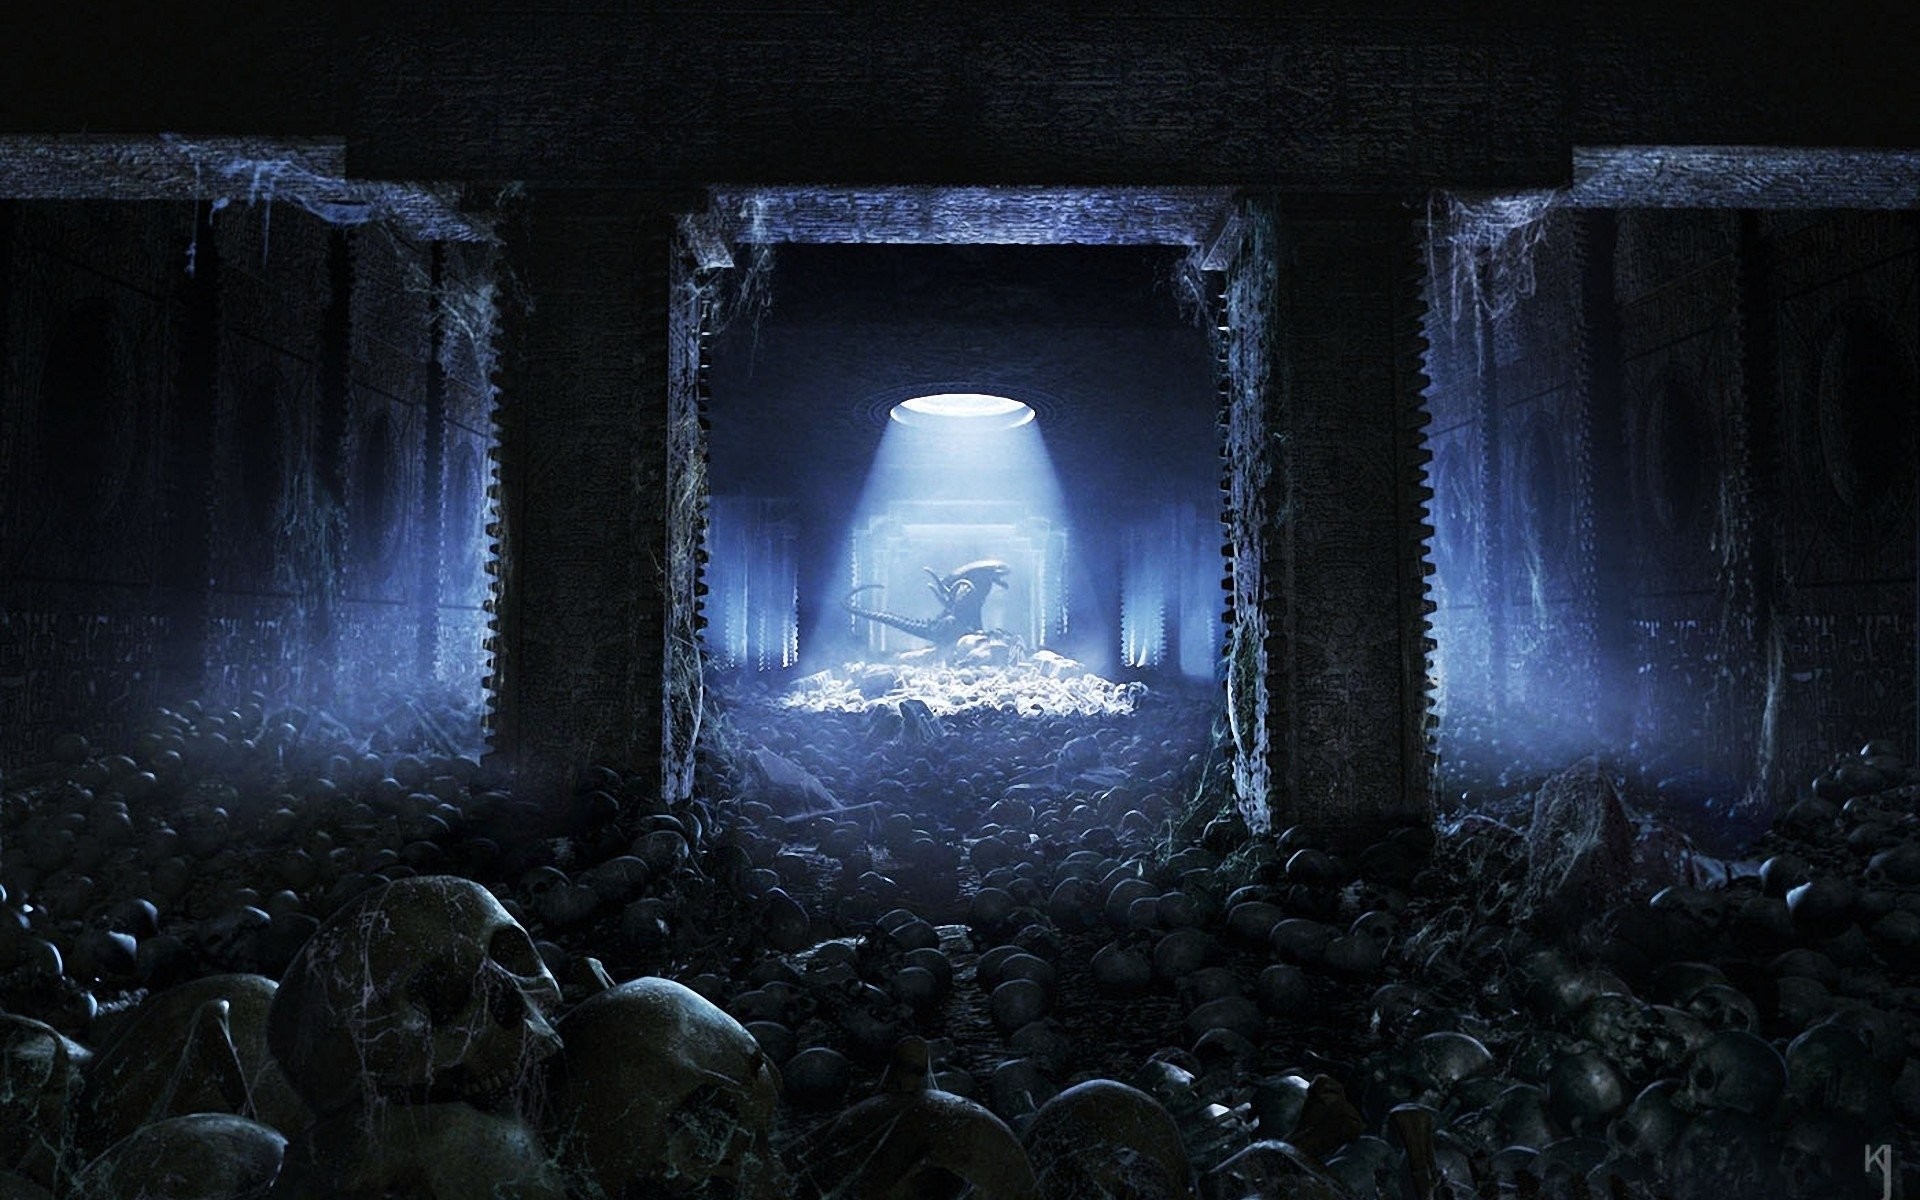 Sci Fi Alien vs. Predator HD Wallpaper